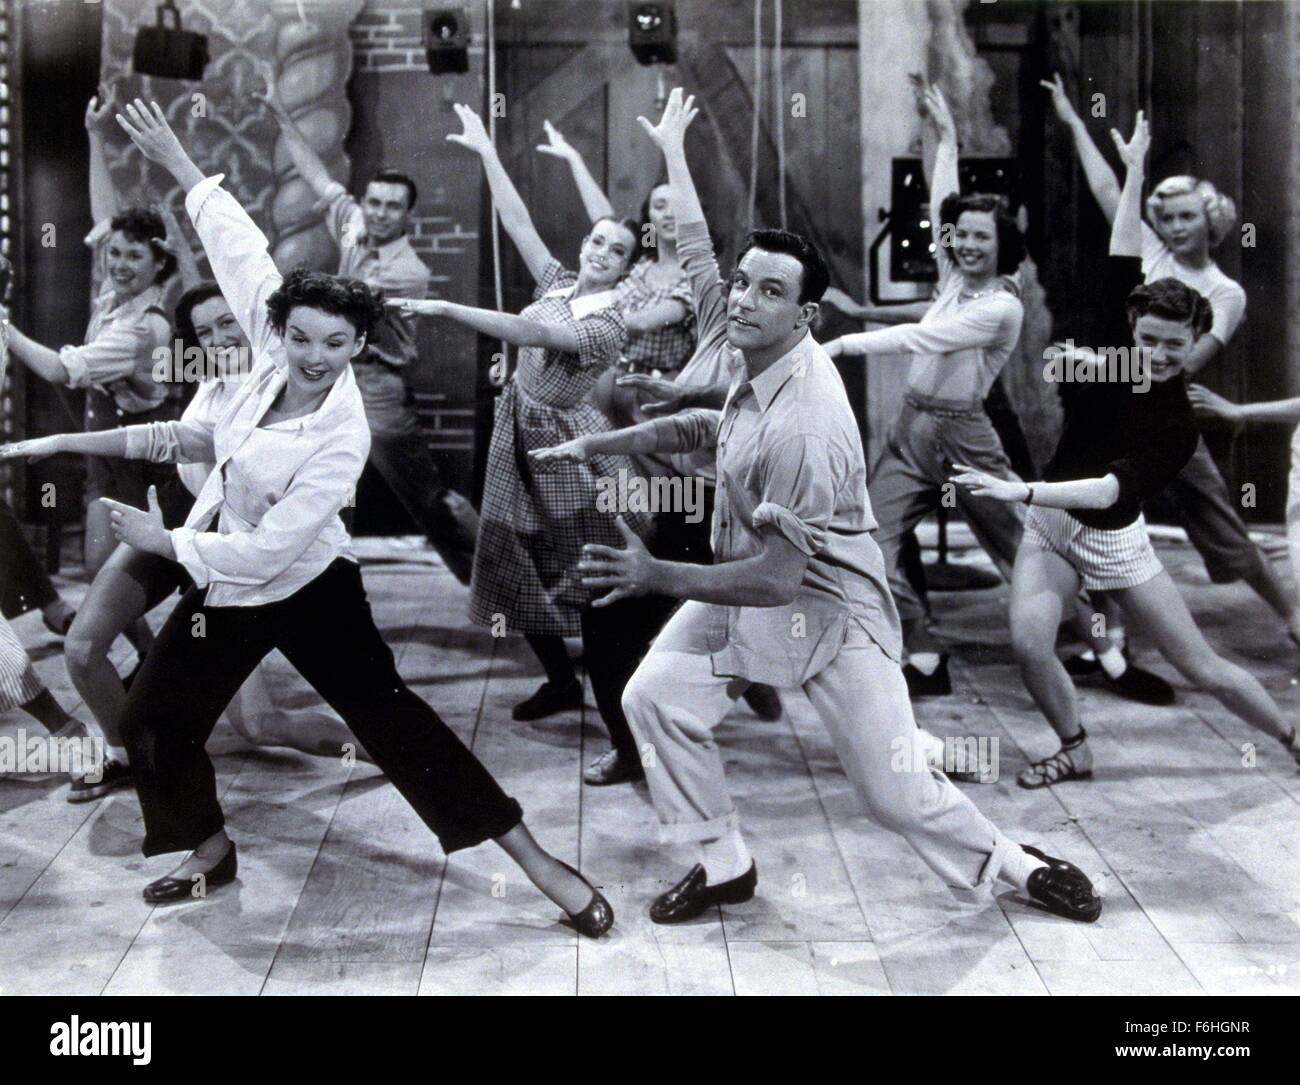 1950, Filmtitel: Sommertheater, Regie: CHARLES WALTERS, Studio: MGM, abgebildet: JUDY GARLAND, GENE KELLY. (Bild Kredit: SNAP) Stockfoto